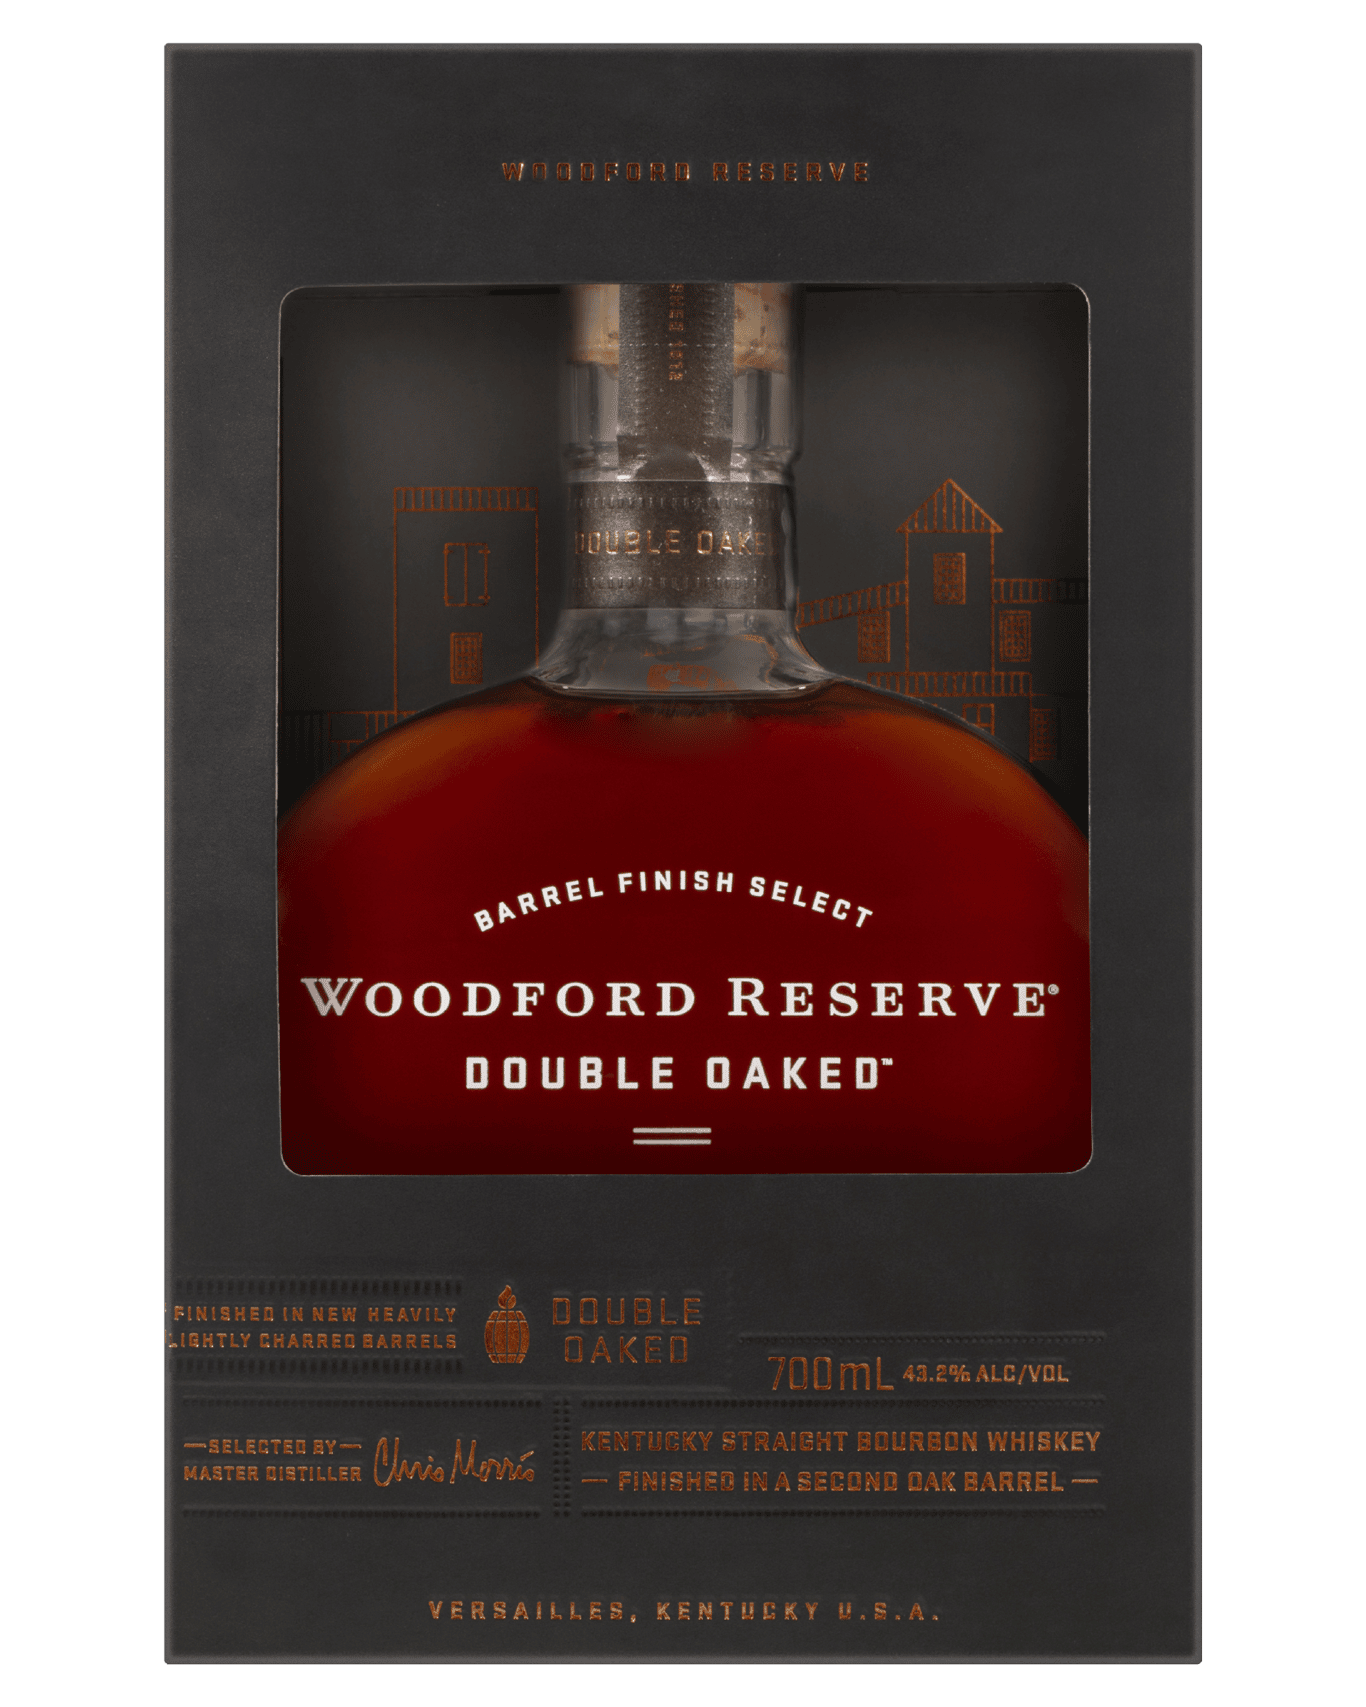 Woodford Reserve Double Oaked Bourbon 700mL Whisky Kentucky bottle